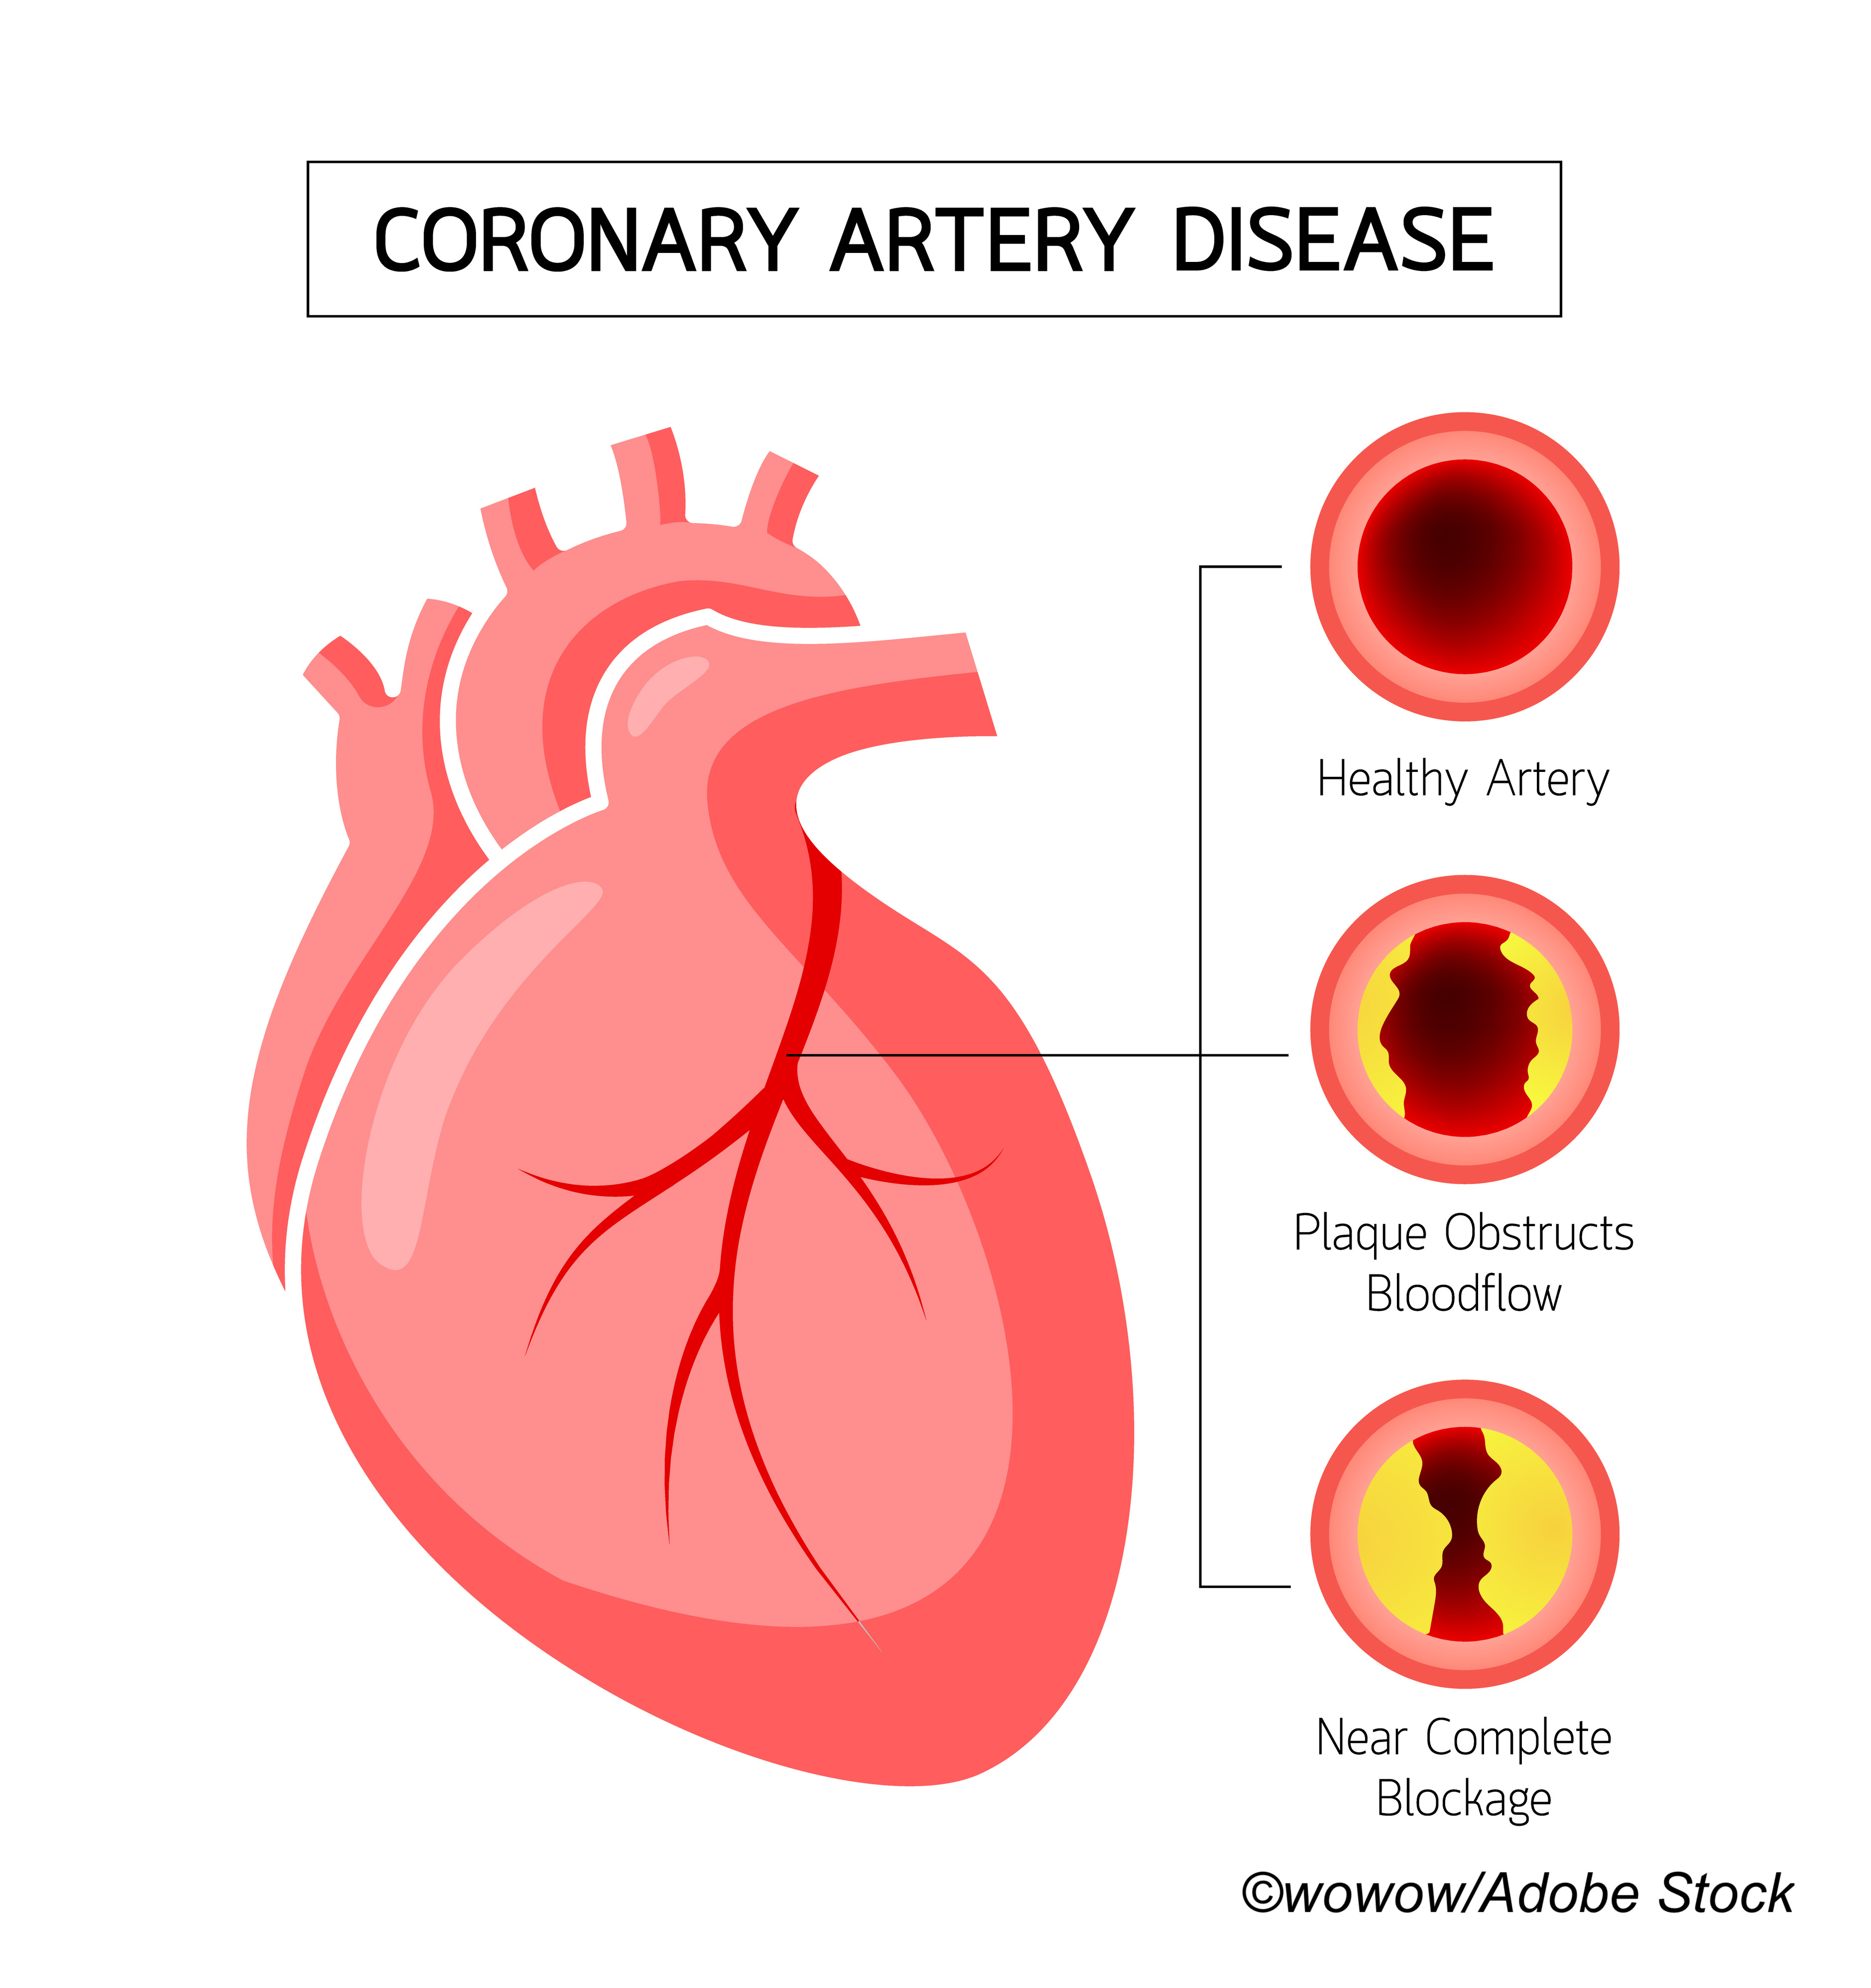 ACC/AHA Issues New Coronary Artery Revascularization Guideline